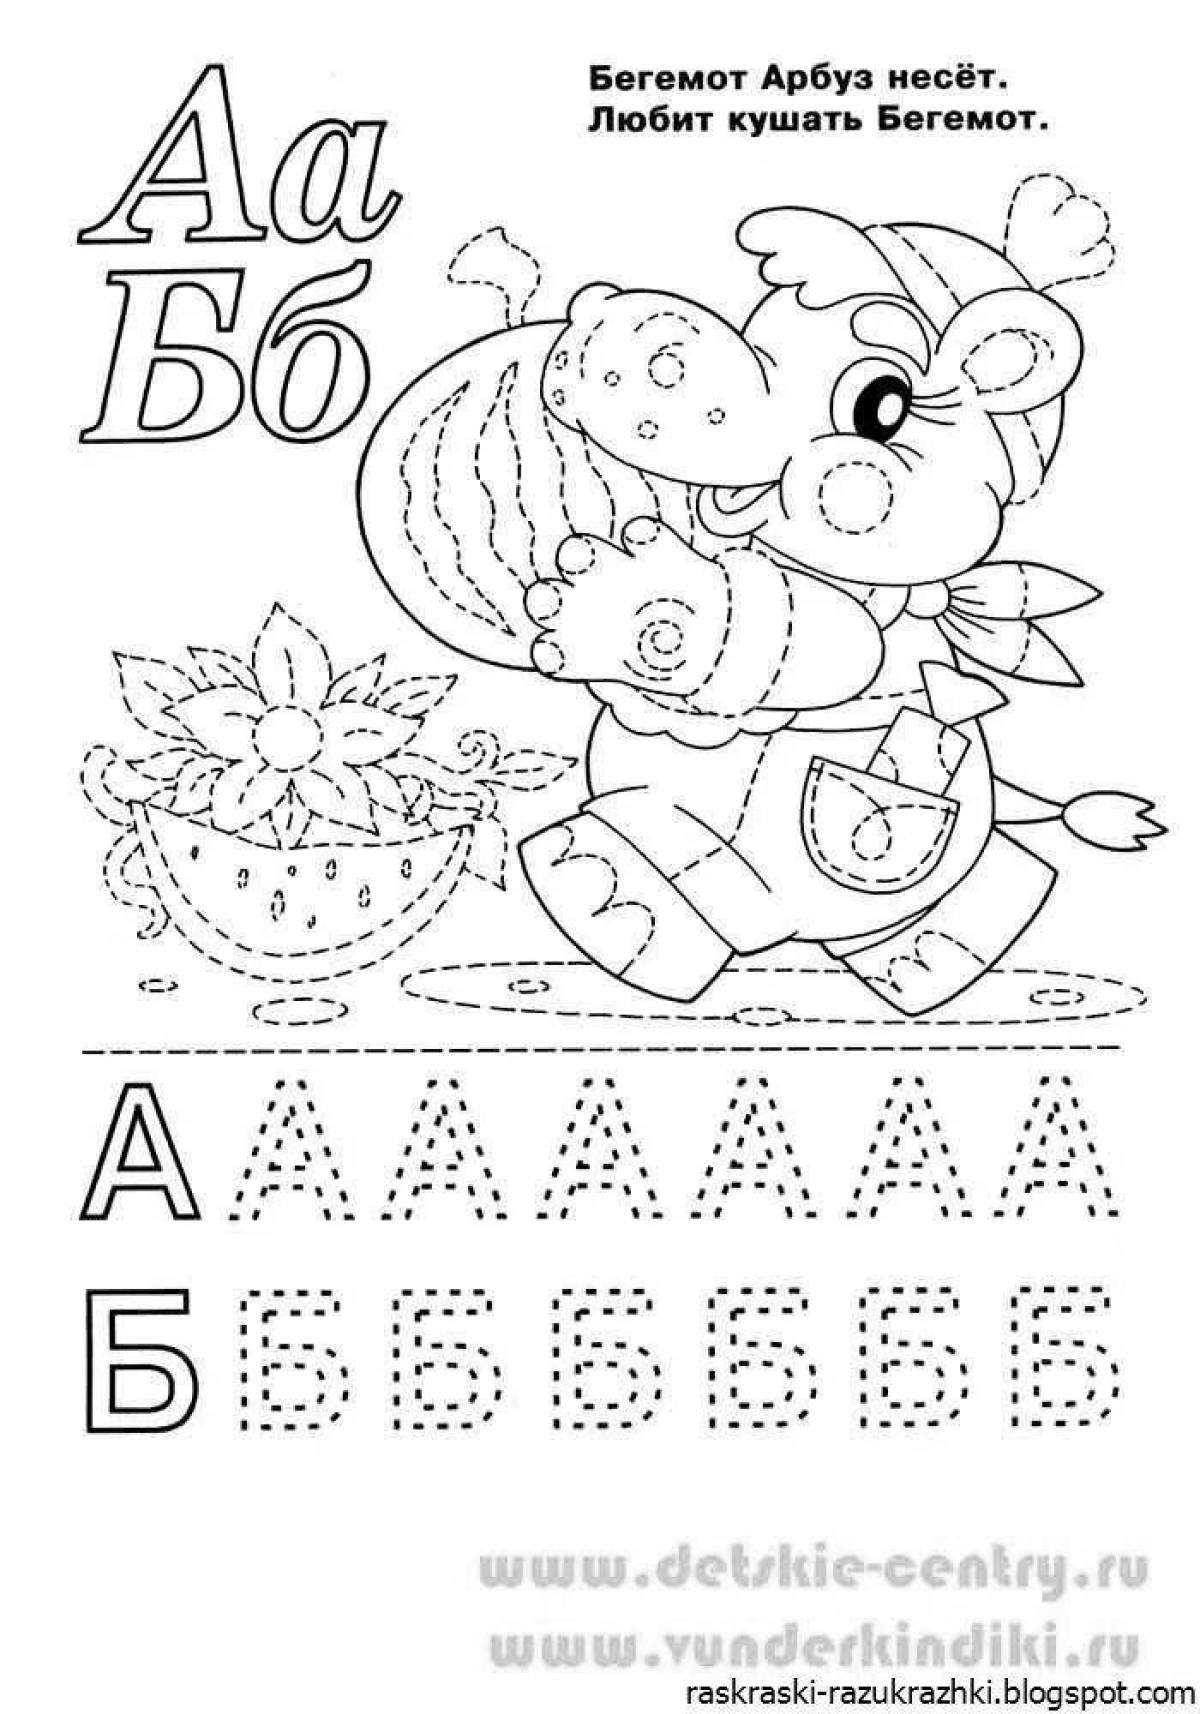 Alphabet for children 5 6 years old #12